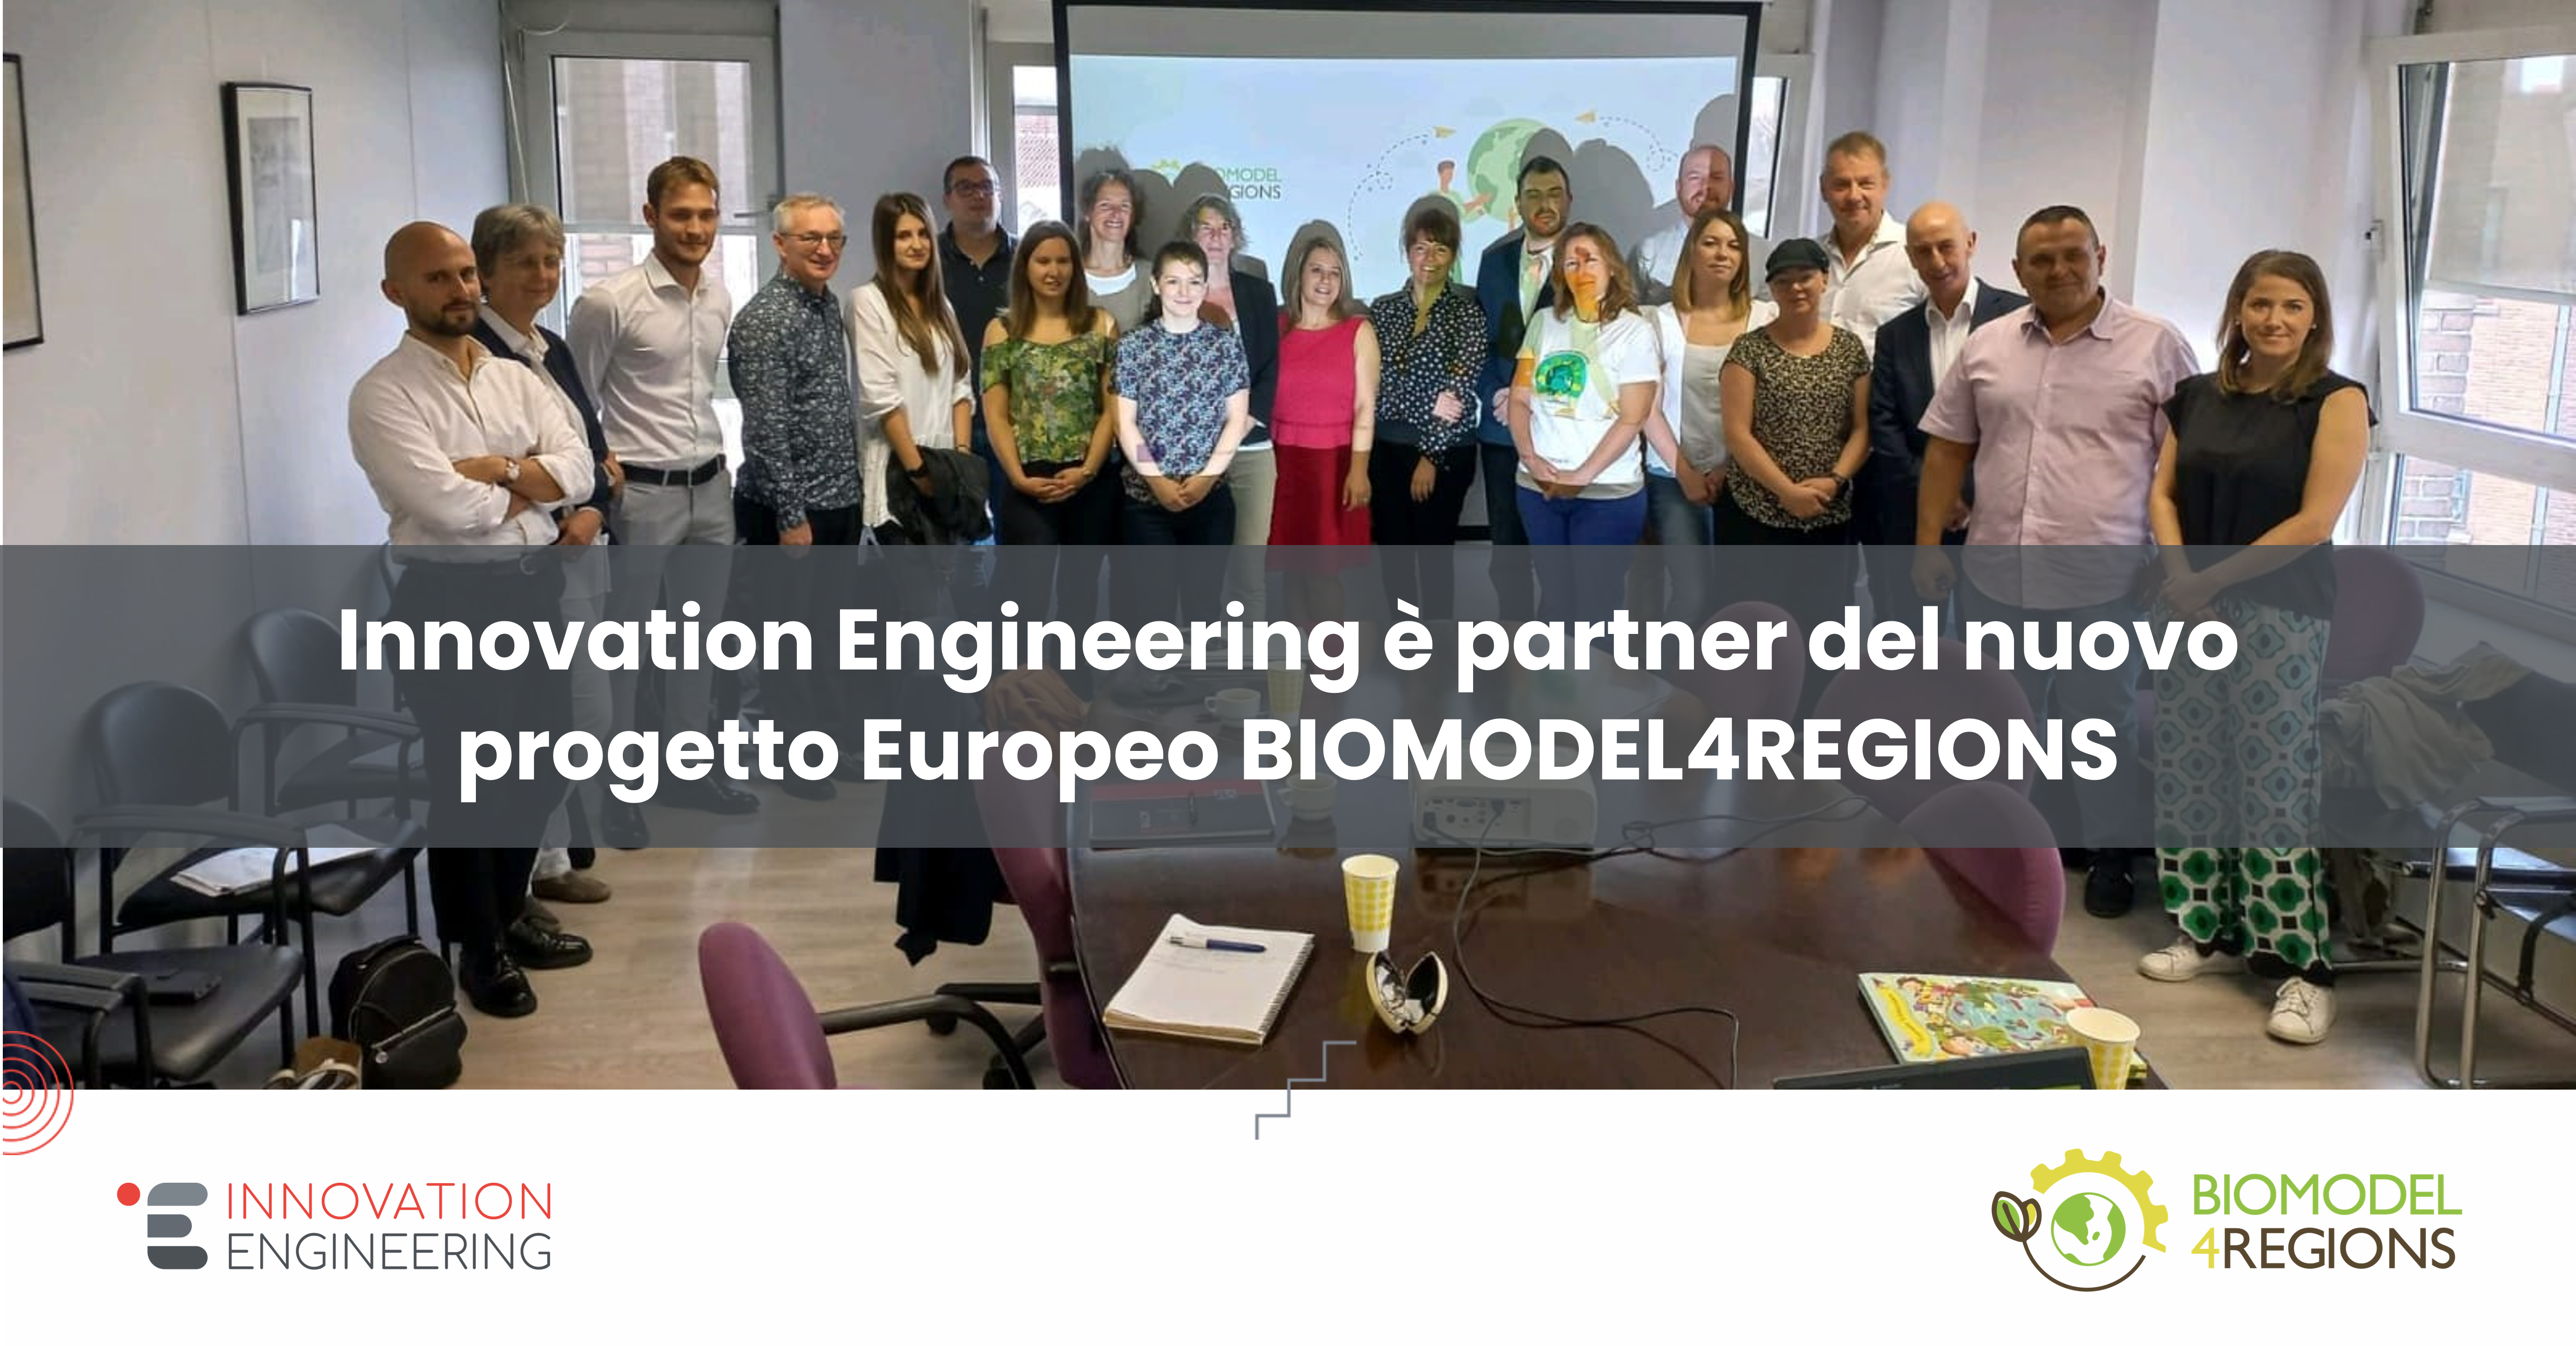 Innovation Engineering è partner del nuovo progetto Europeo BIOMODEL4REGIONS